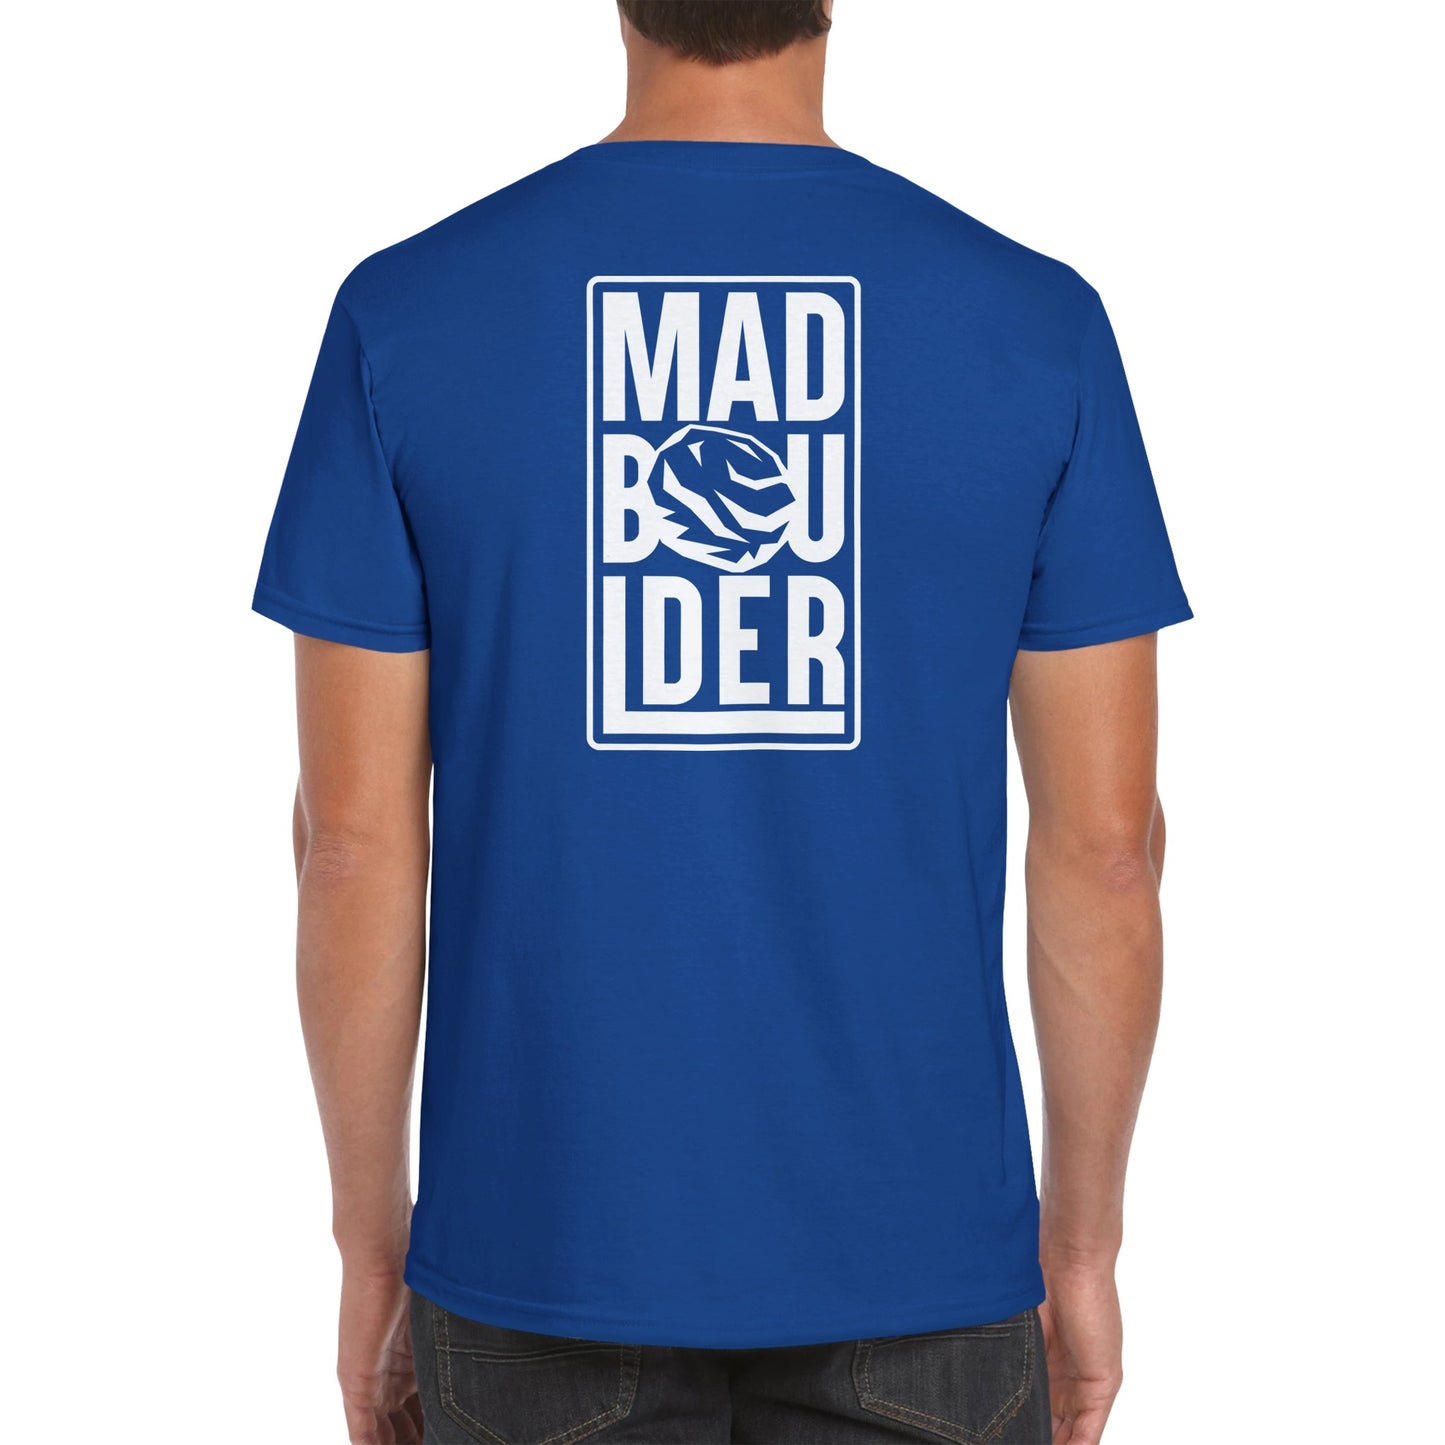 MadBoulder White Edition Classic Unisex T-shirt